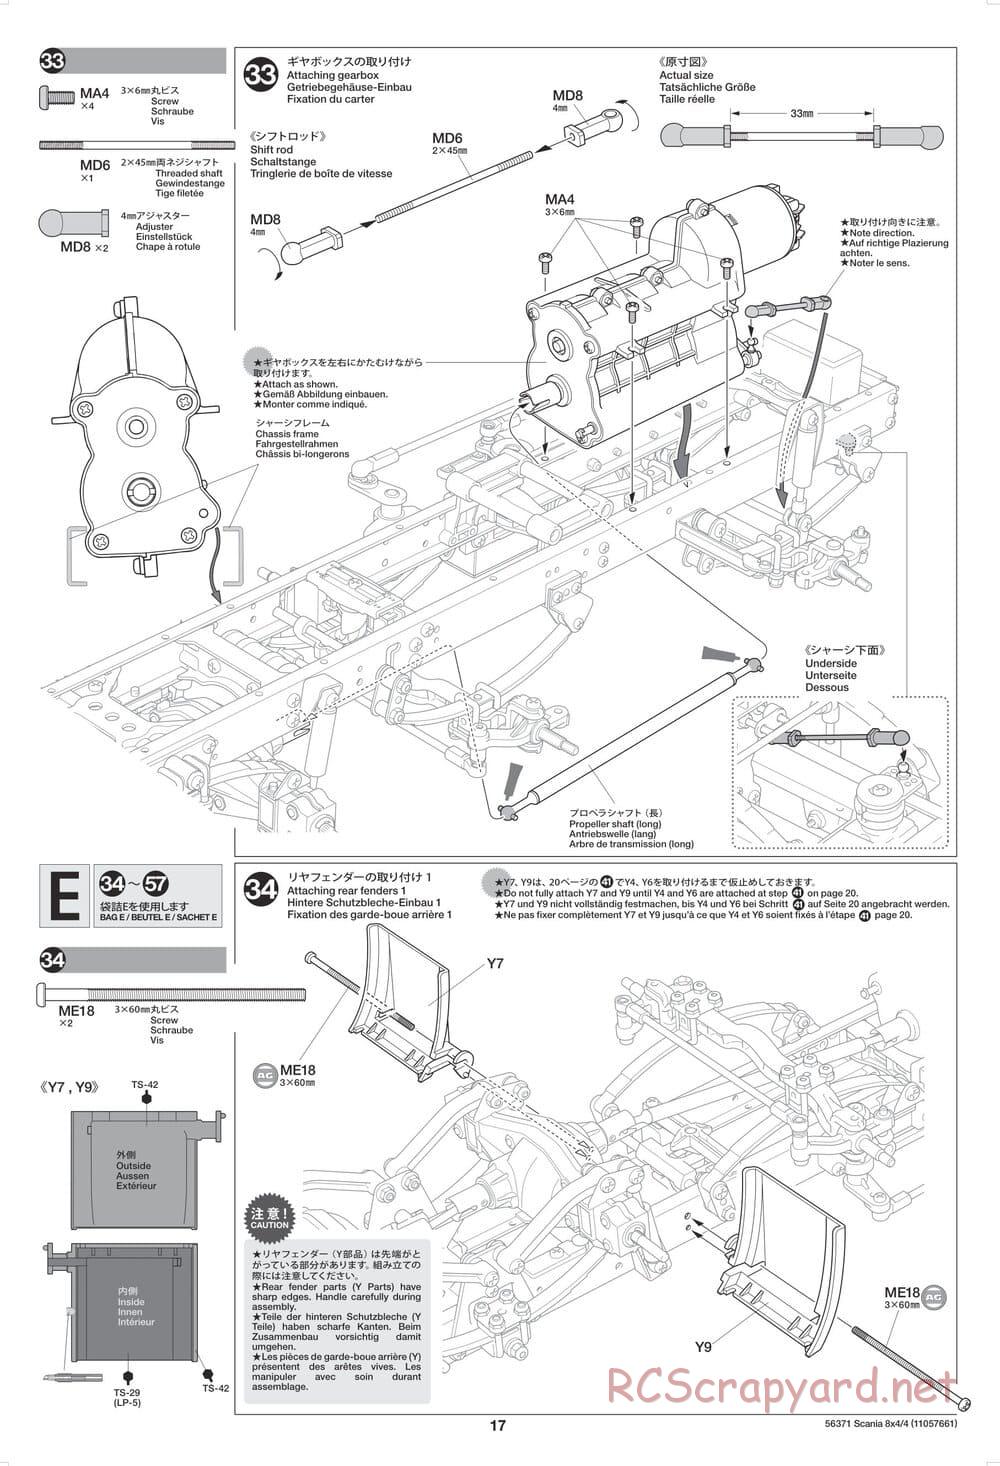 Tamiya - Scania 770 S 8x4/4 Chassis - Manual - Page 17